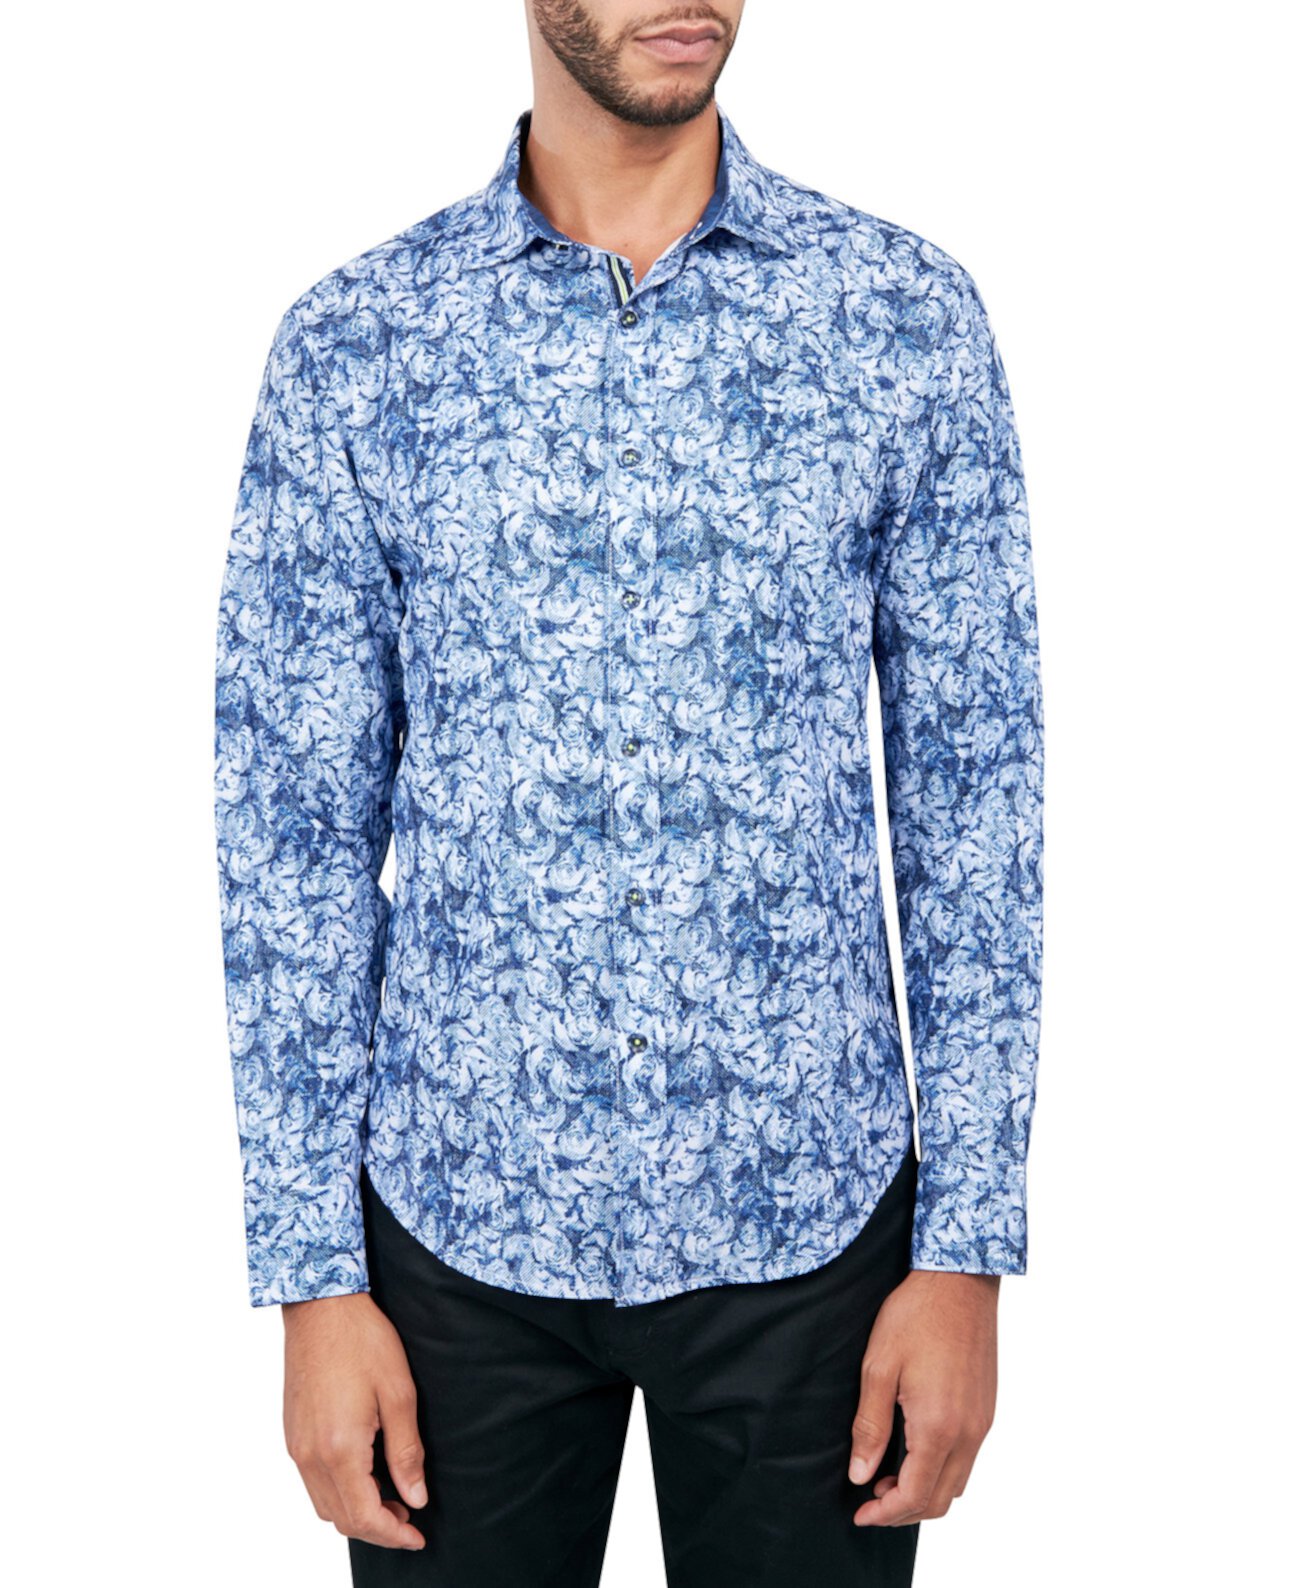 Мужская эластичная рубашка на пуговицах с принтом роз, стандартного кроя, без утюга Society of Threads